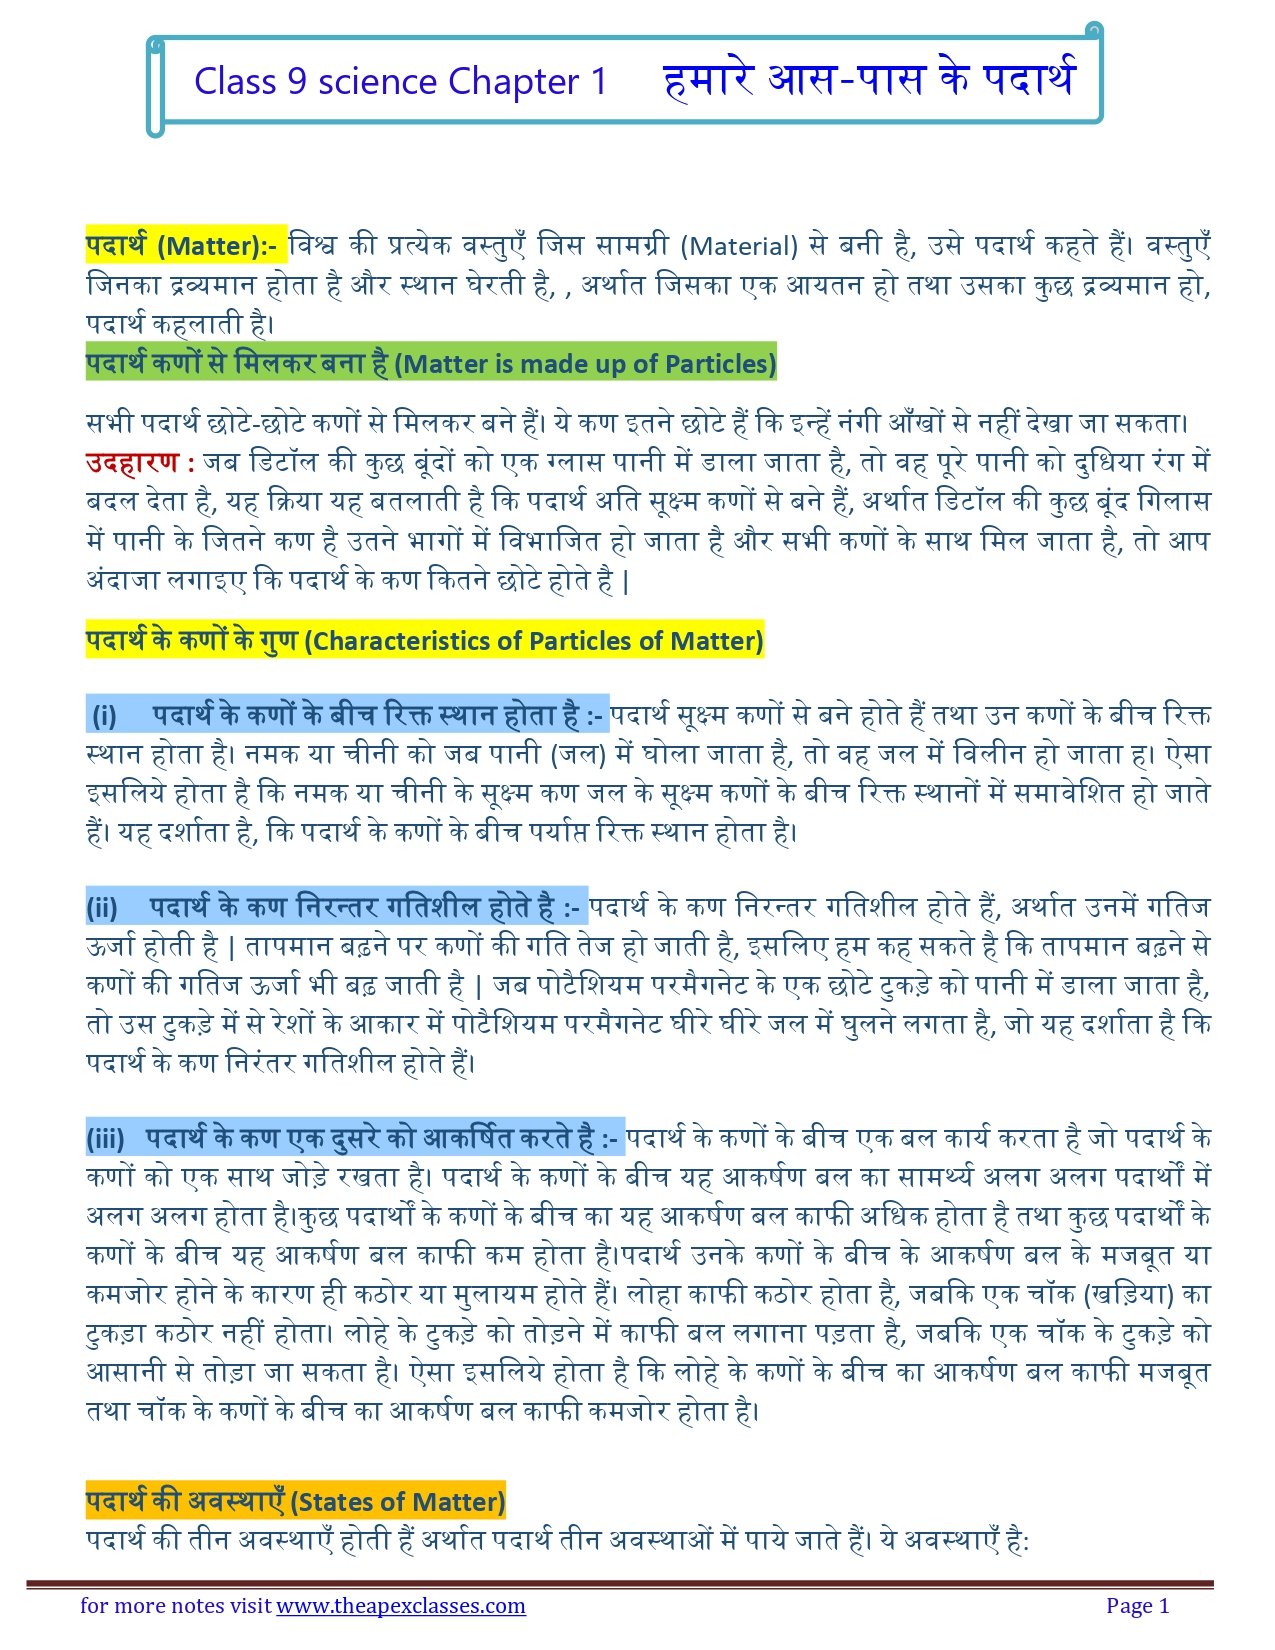 Class 9 Science Chapter-1 Notes In Hindi हमारे आसपास के पदार्थ - APEX